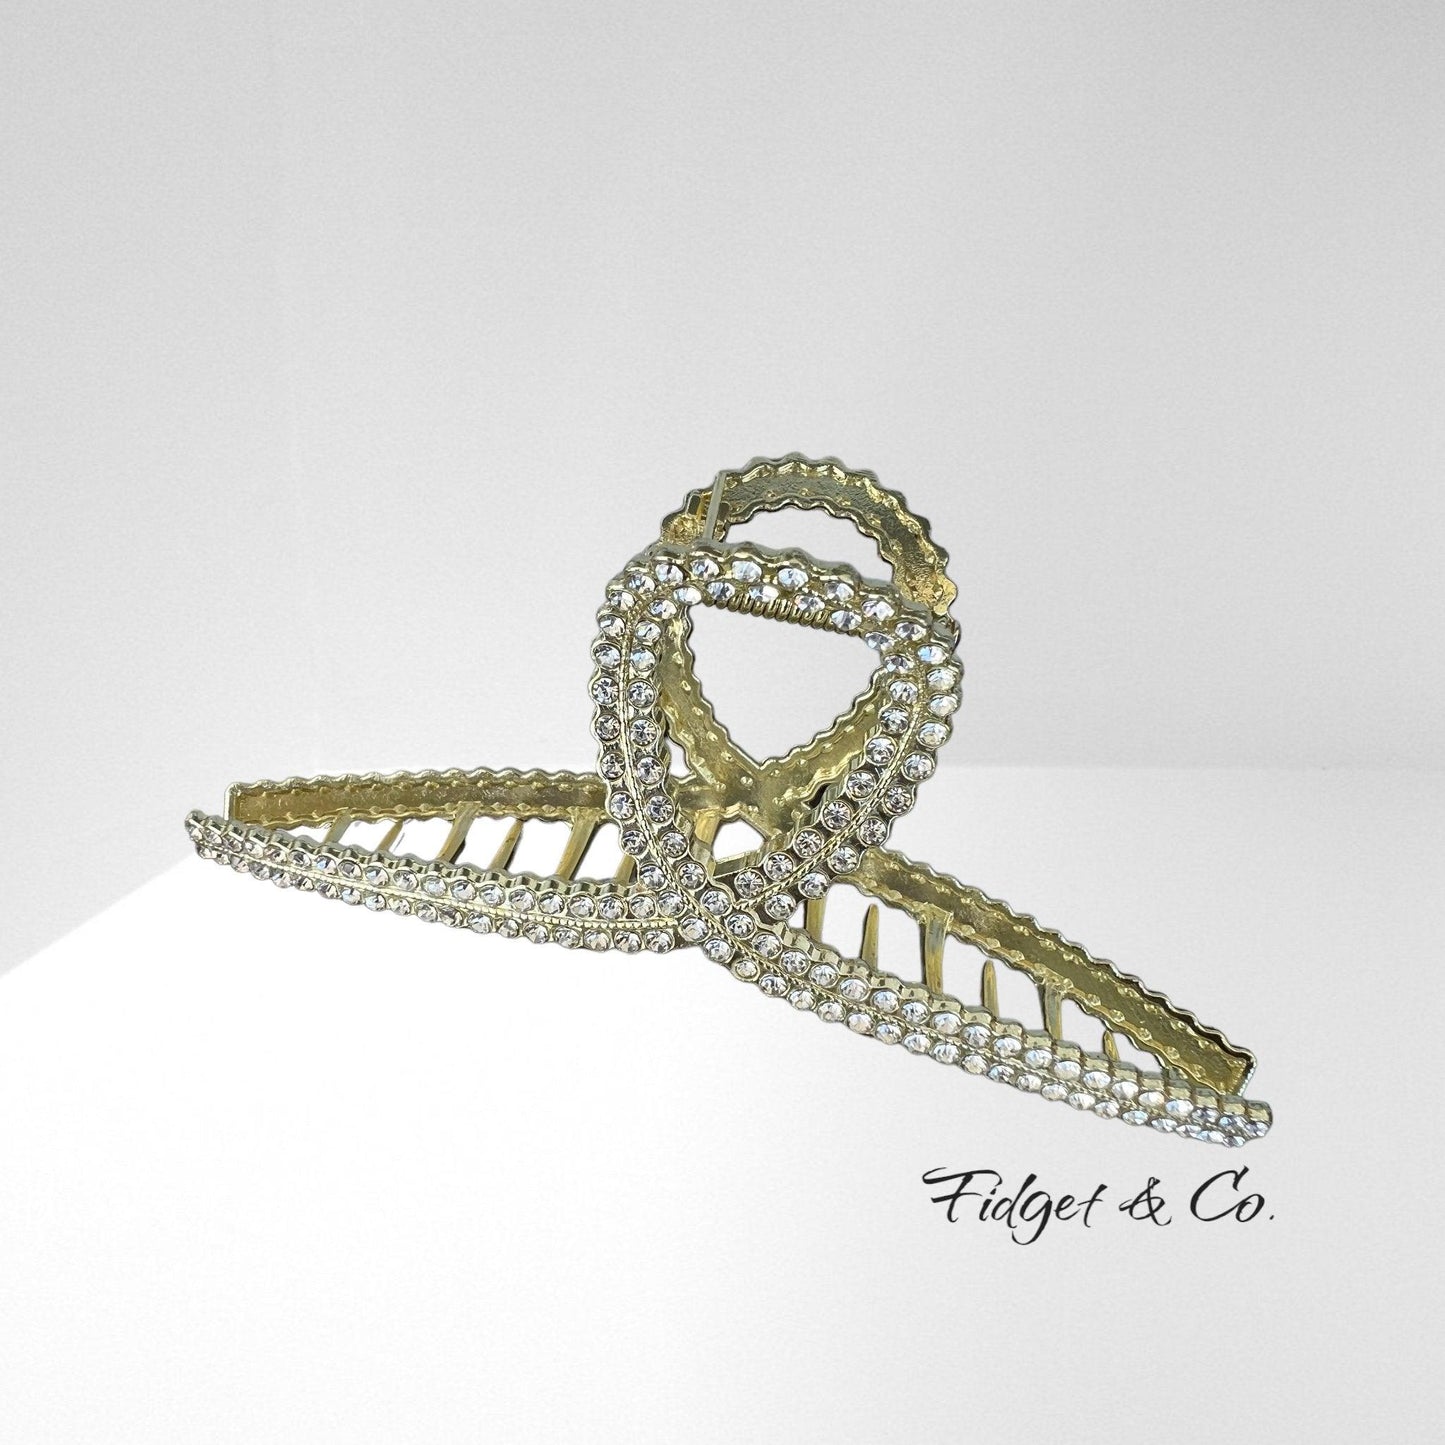 Metal Lux Claw Clips - Fidget & Co.